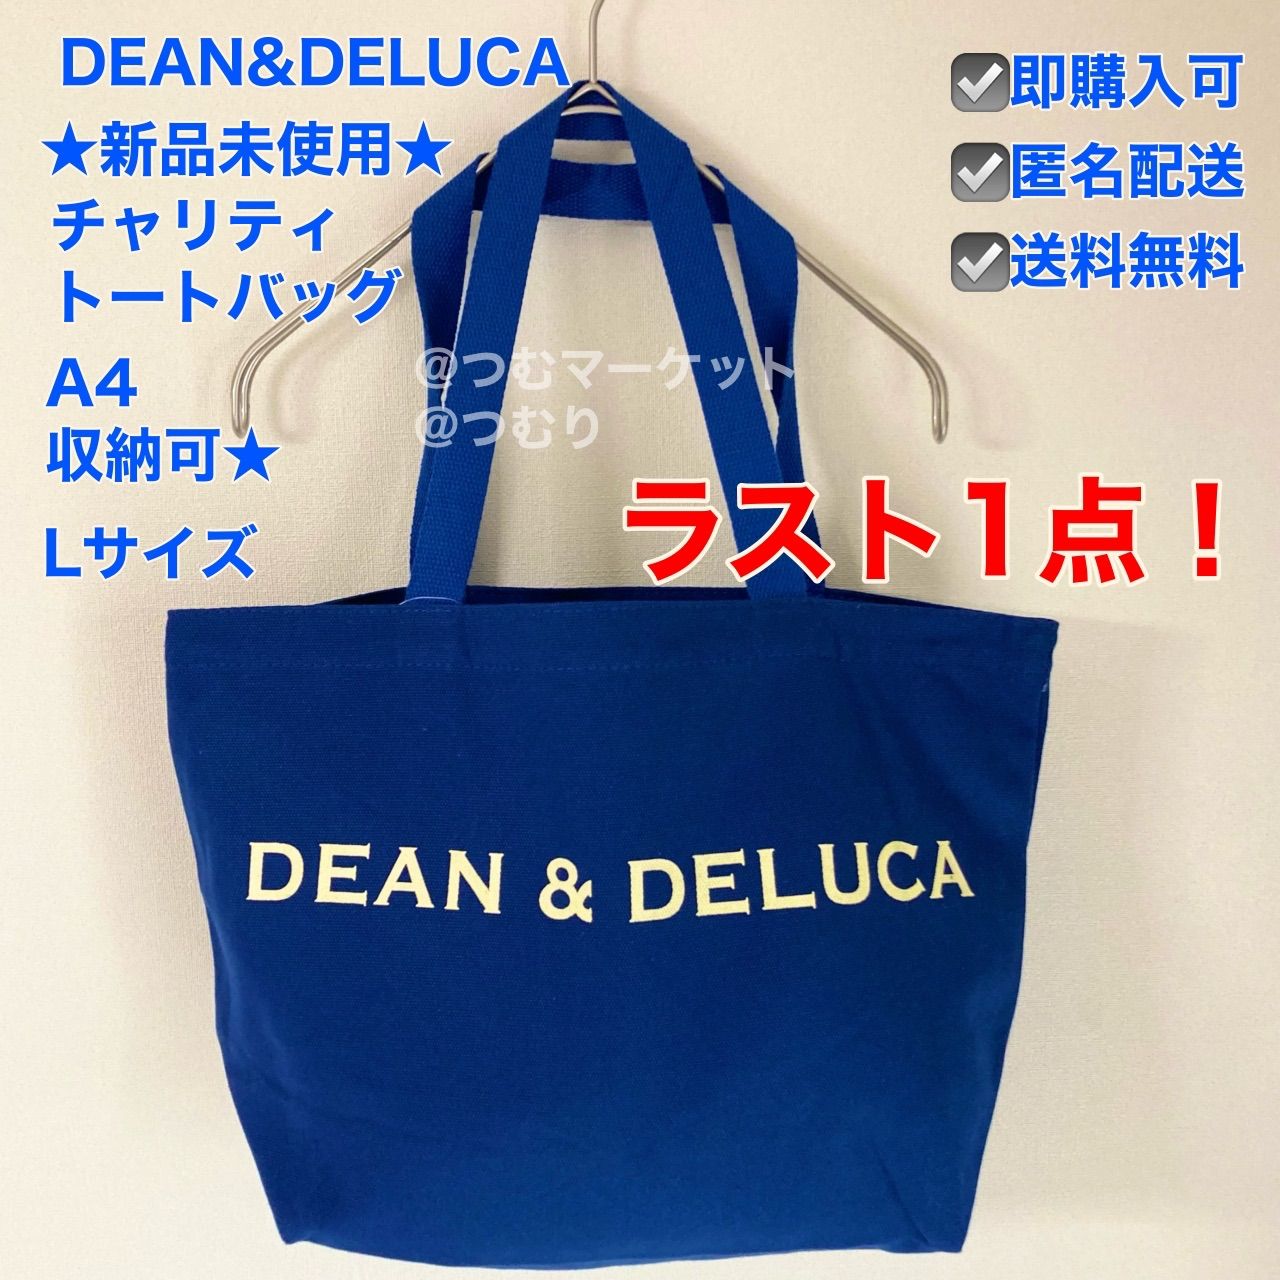 DEAN &DELUCA トートバッグ Lサイズ - バッグ